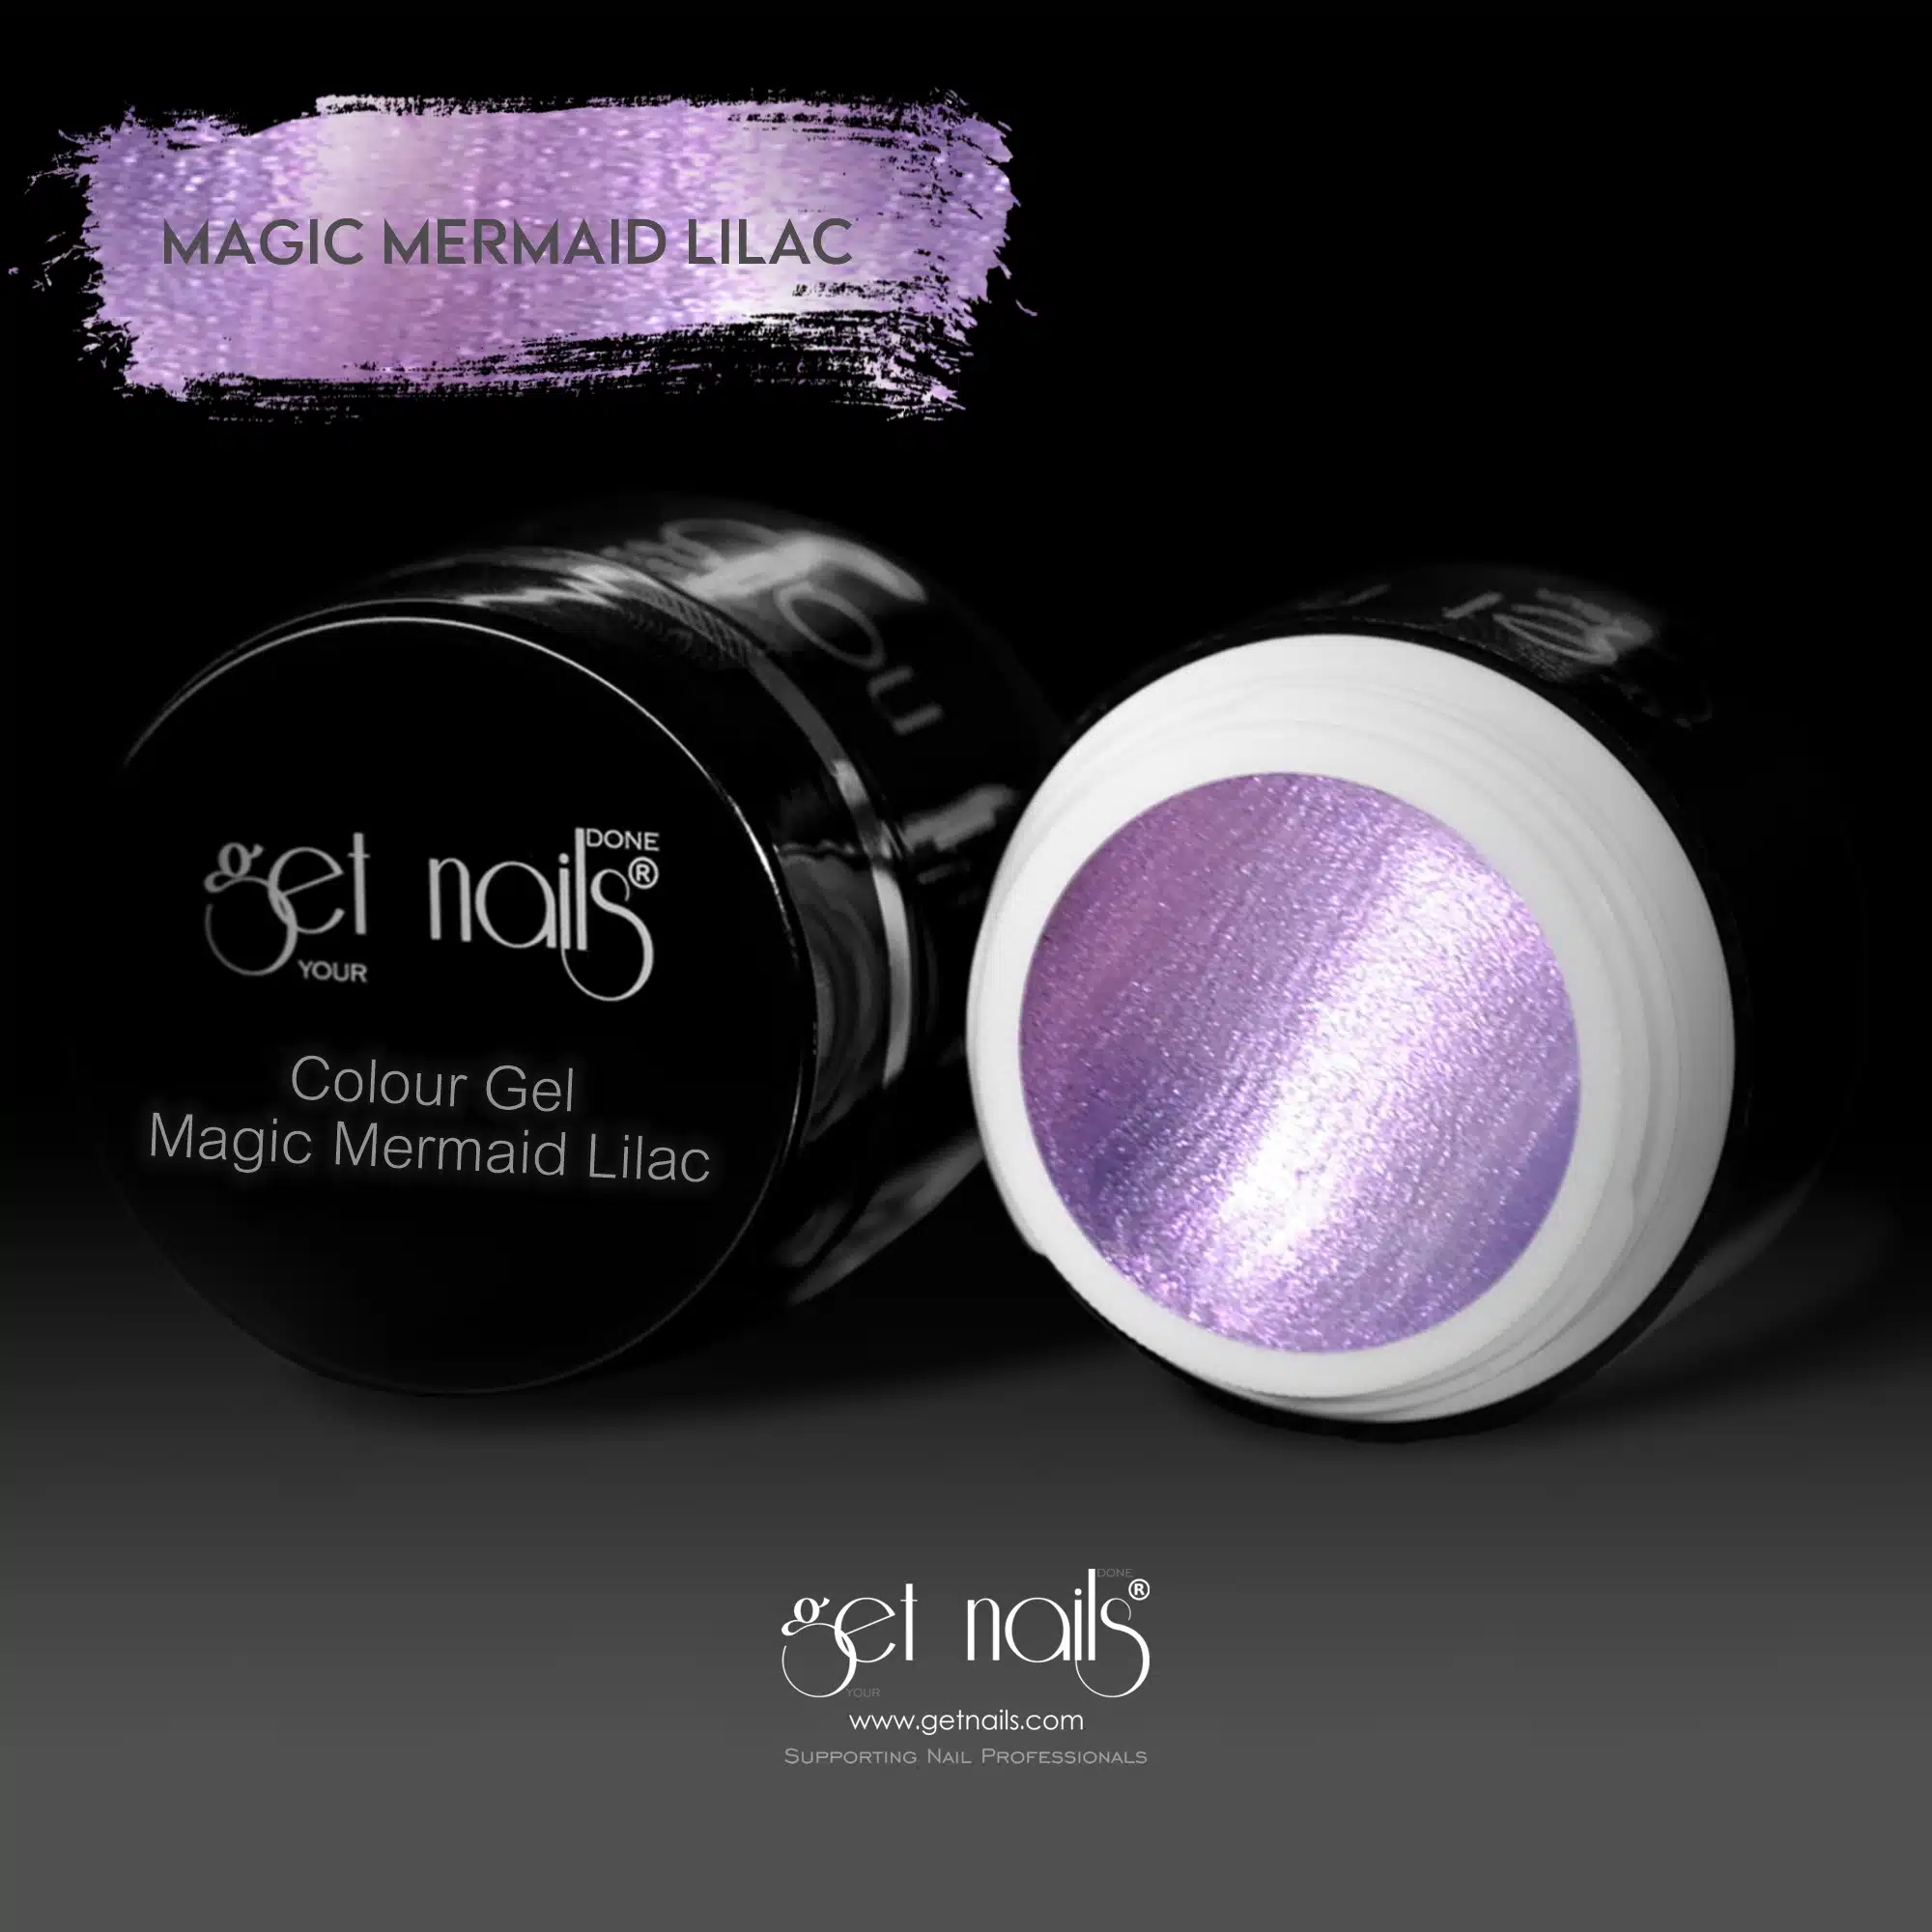 Get Nails Austria - Gel colorato Magic Mermaid Lilac 5g